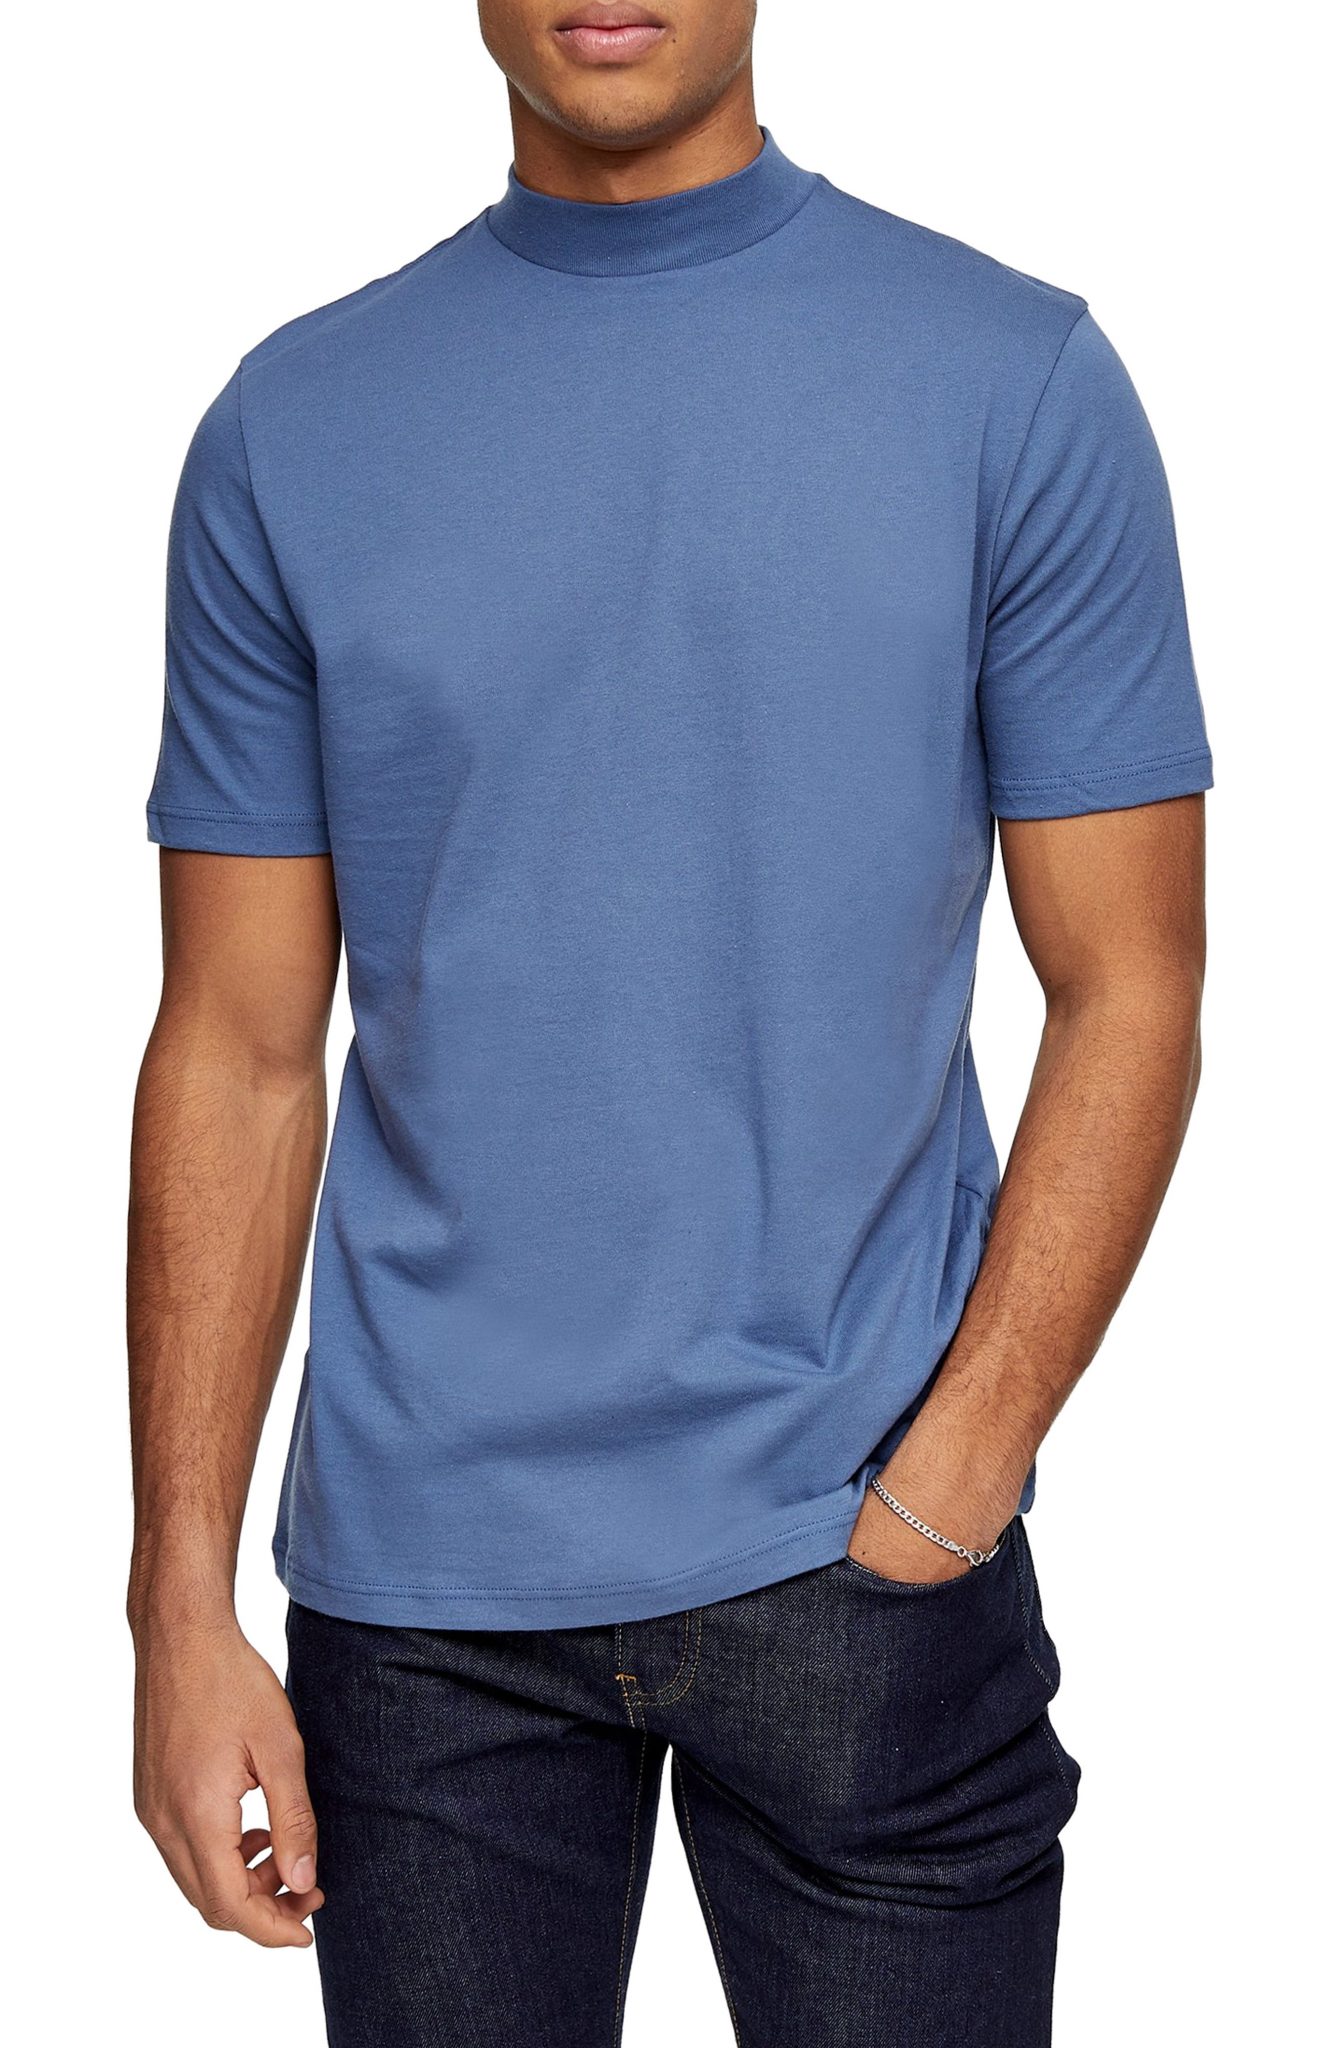 Men S Topman Mock Neck T Shirt Size Large Blue The Fashionisto